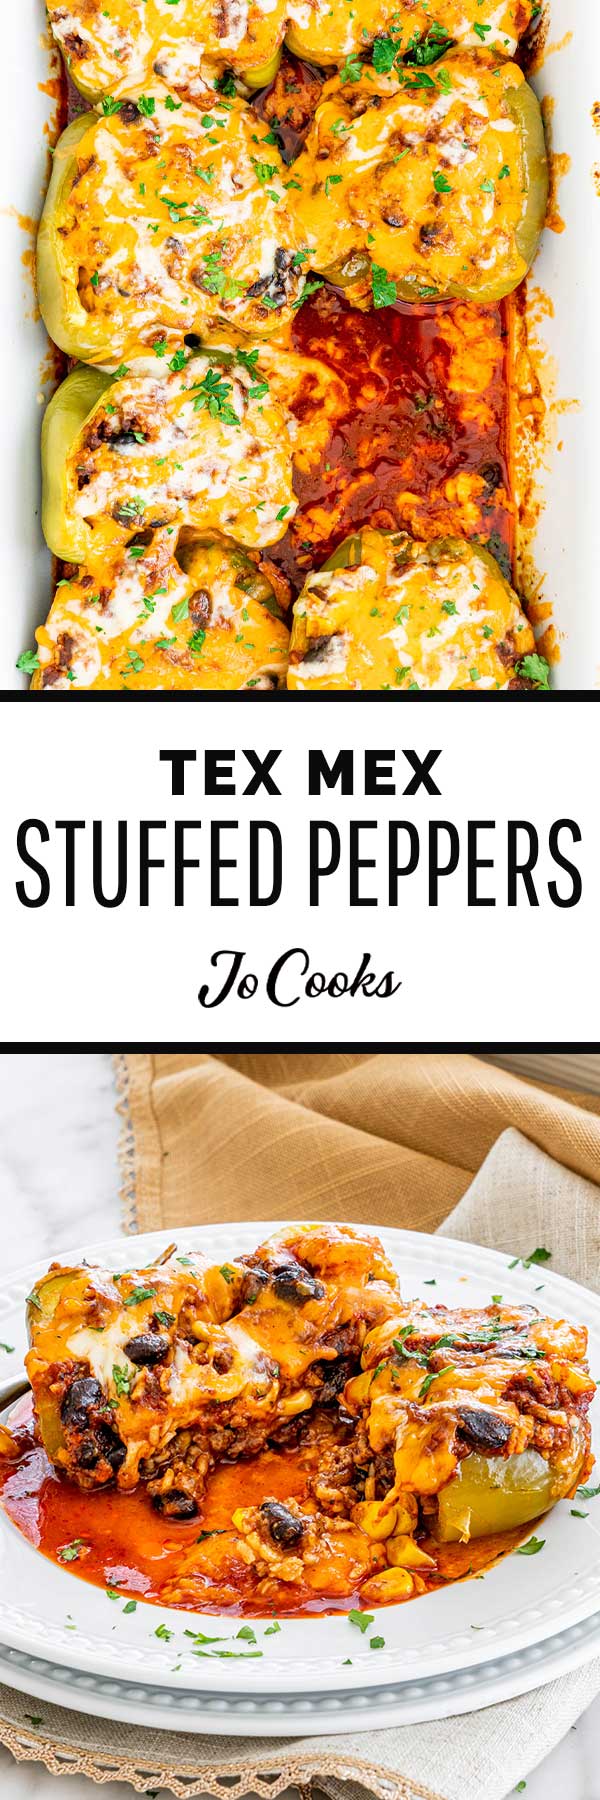 tex mex stuffed peppers